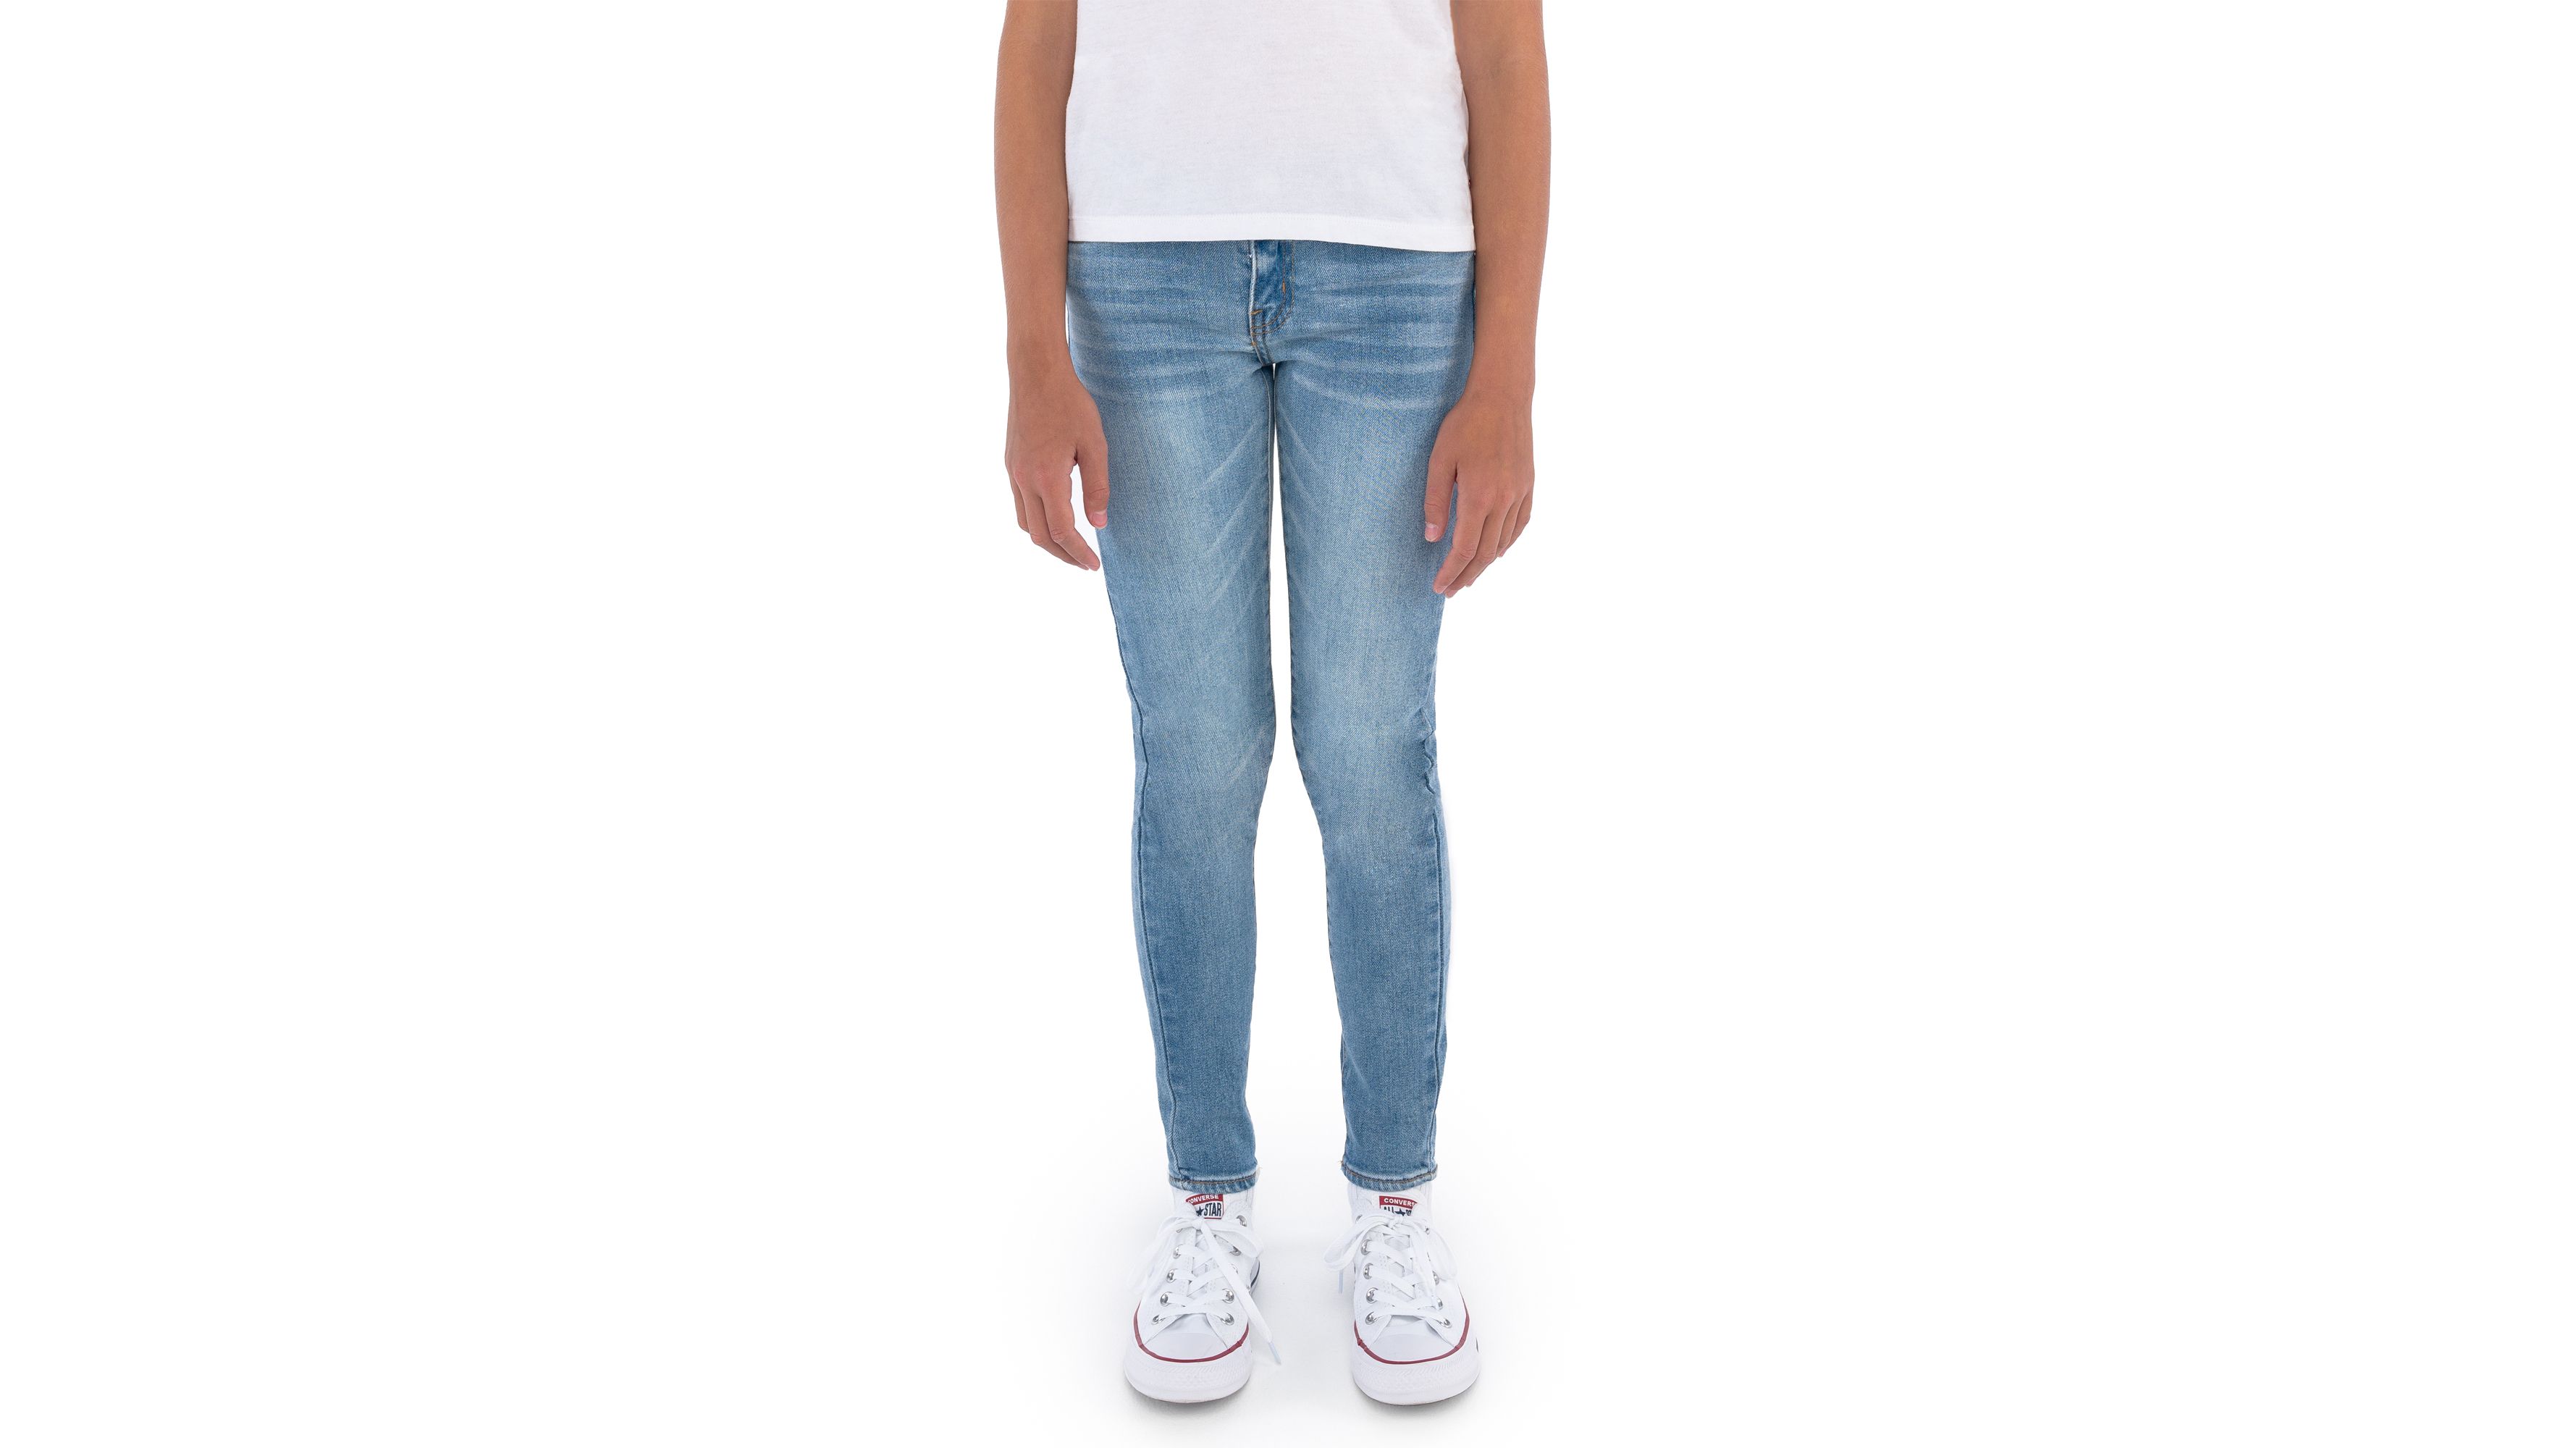 Details about   NWT Gymboree Girls Super Skinny Denim Jeans Size 7 